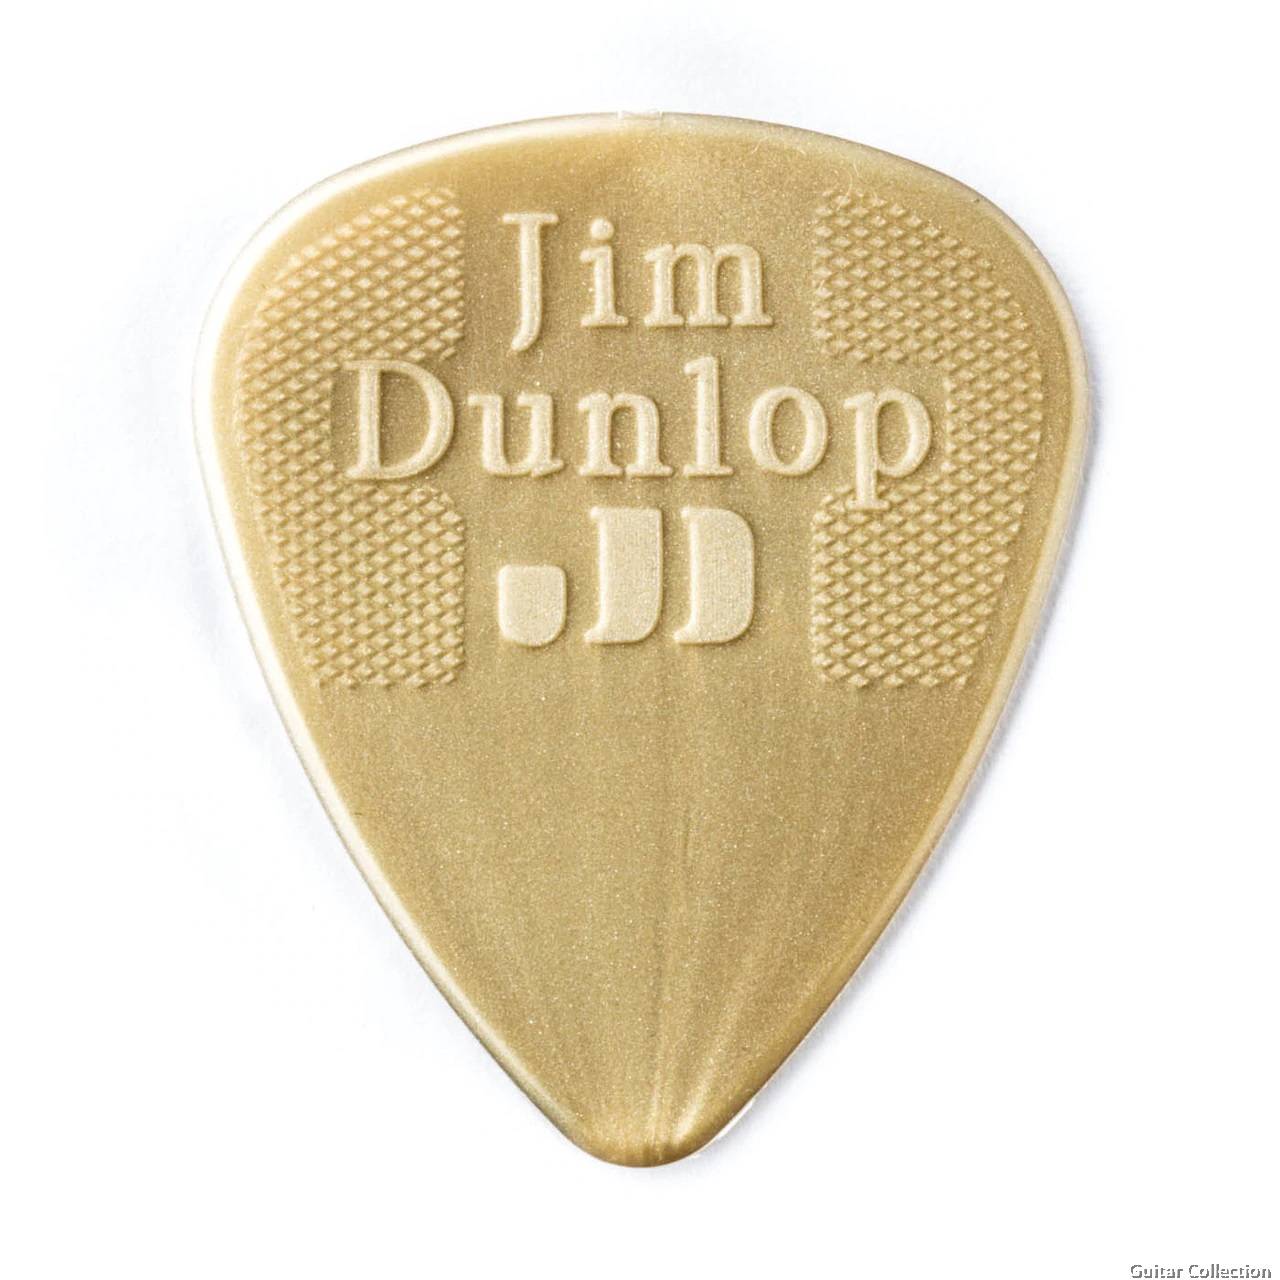 Jim Dunlop 442P073 50th Anniversary Gold Nylon Guitar Pick 0.73mm Guitar Picks Player Pack - Reco Music Malaysia